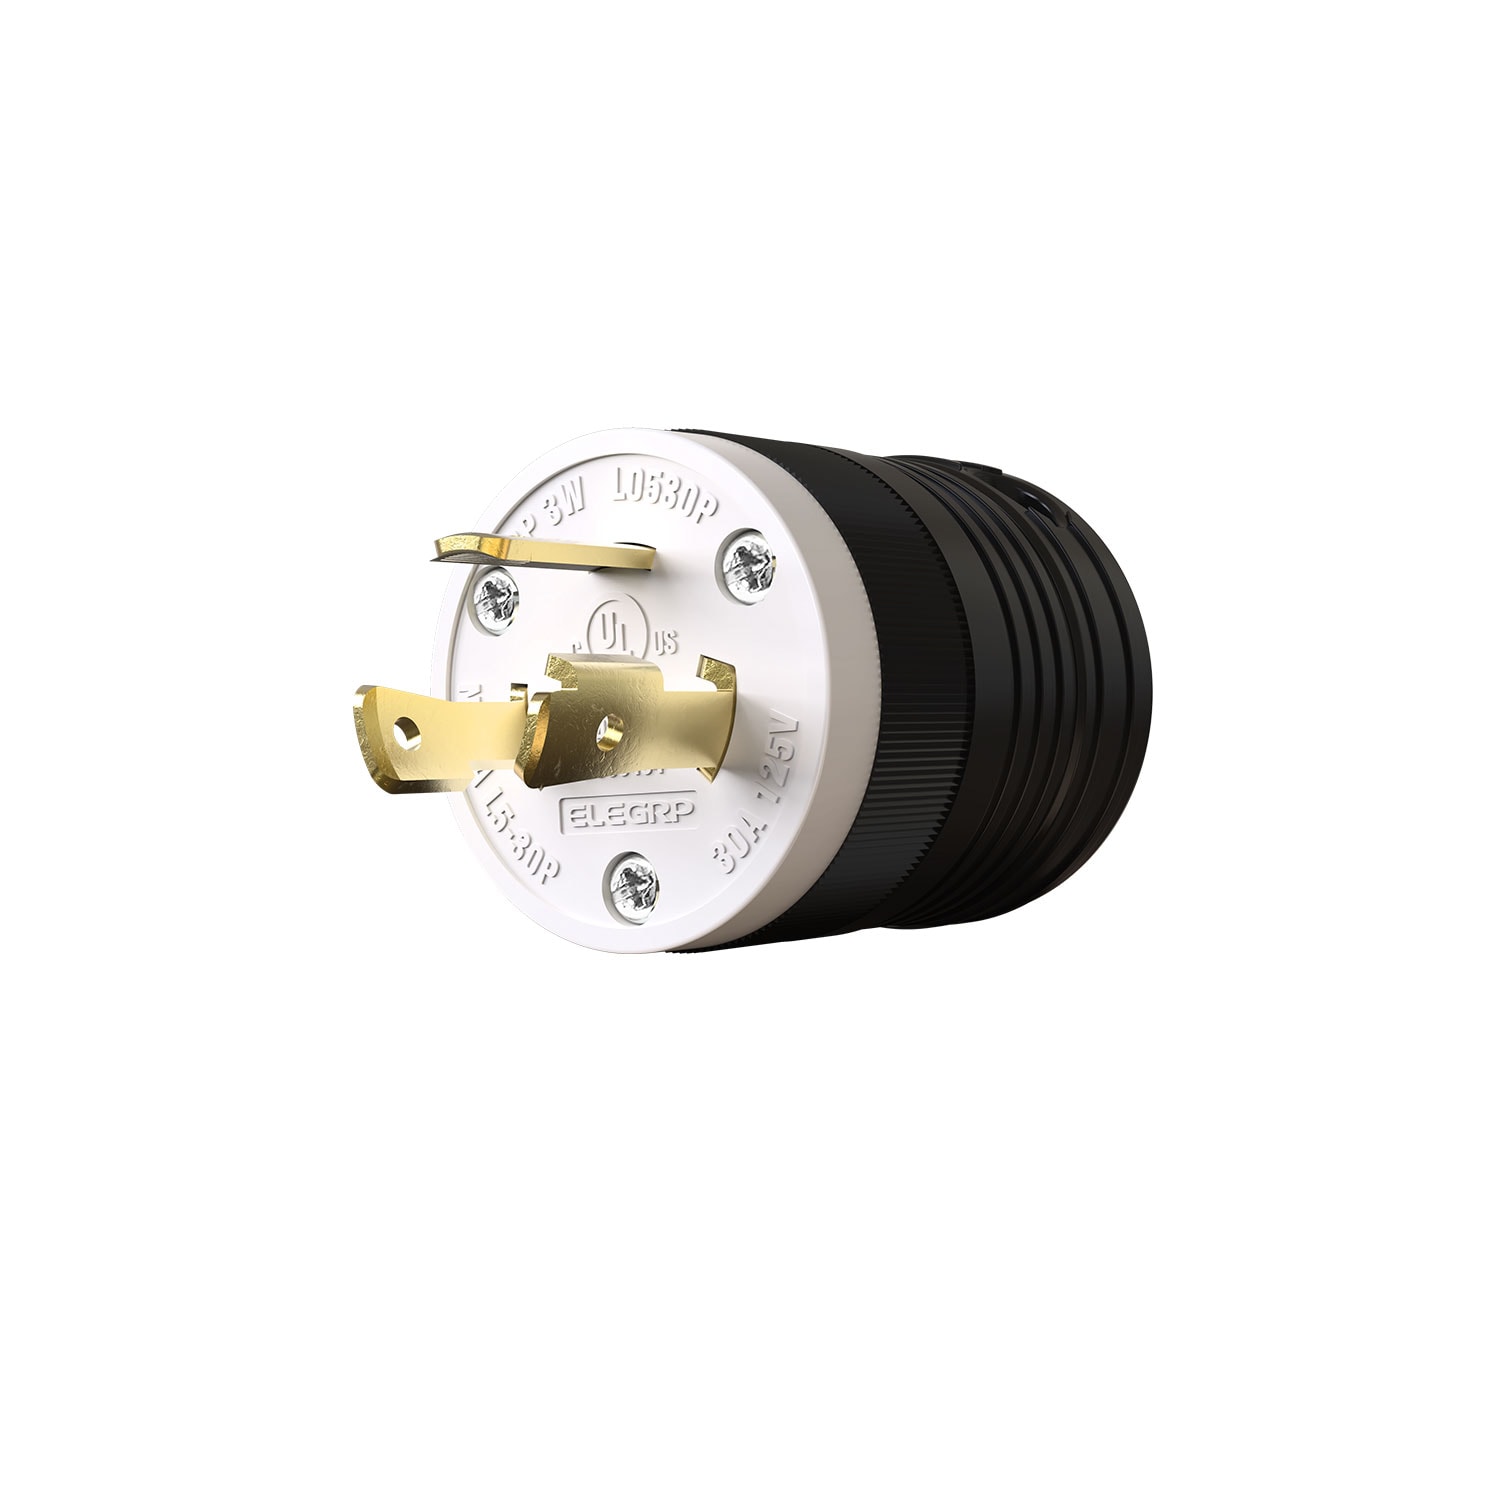 MaxxHaul 30-Amp 125-Volt NEMA L5-30p Watertight 3-wire Industrial